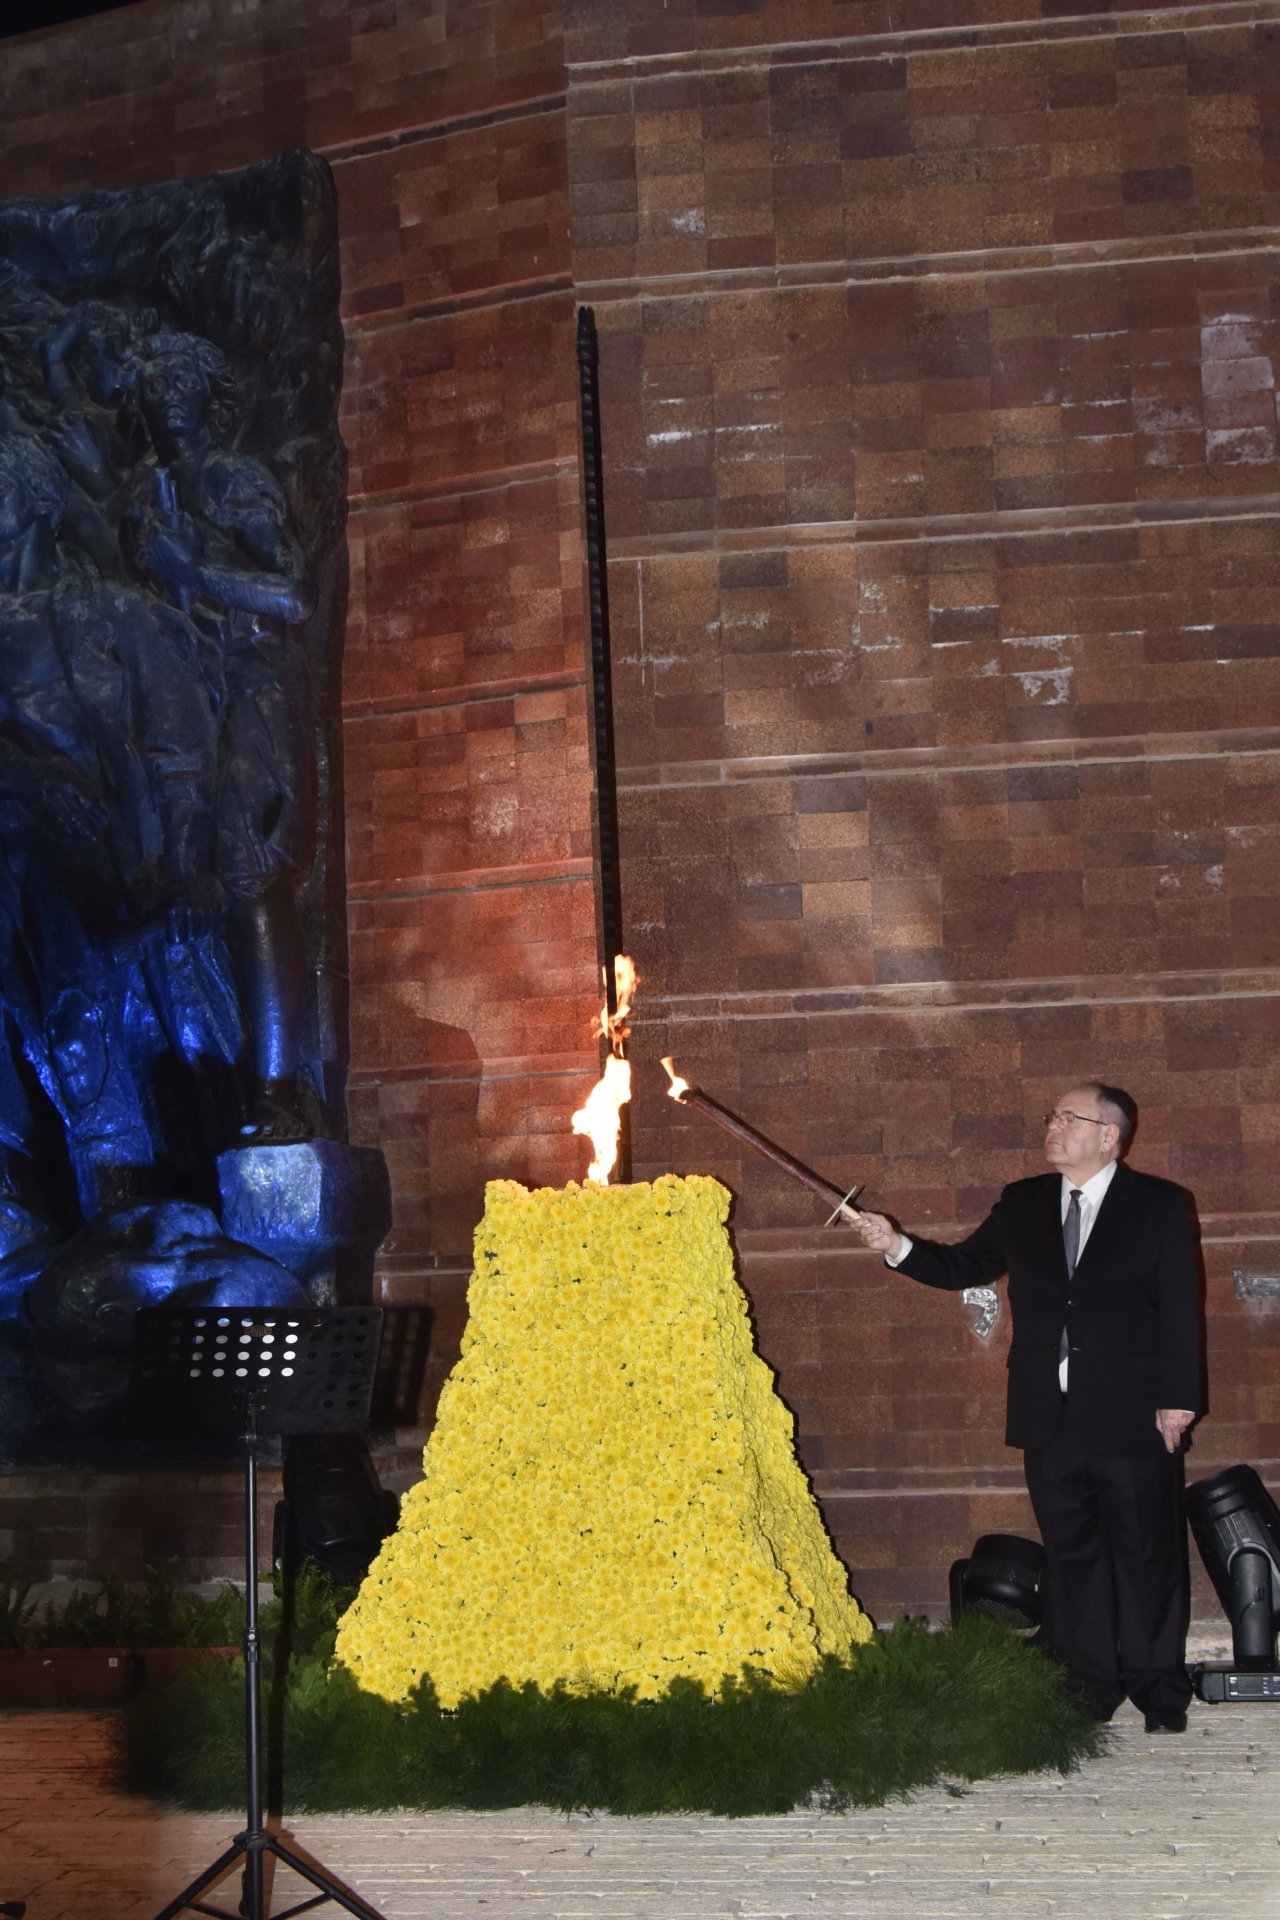 Yad Vashem Chairman Dani Dayan kindled the Memorial Torch